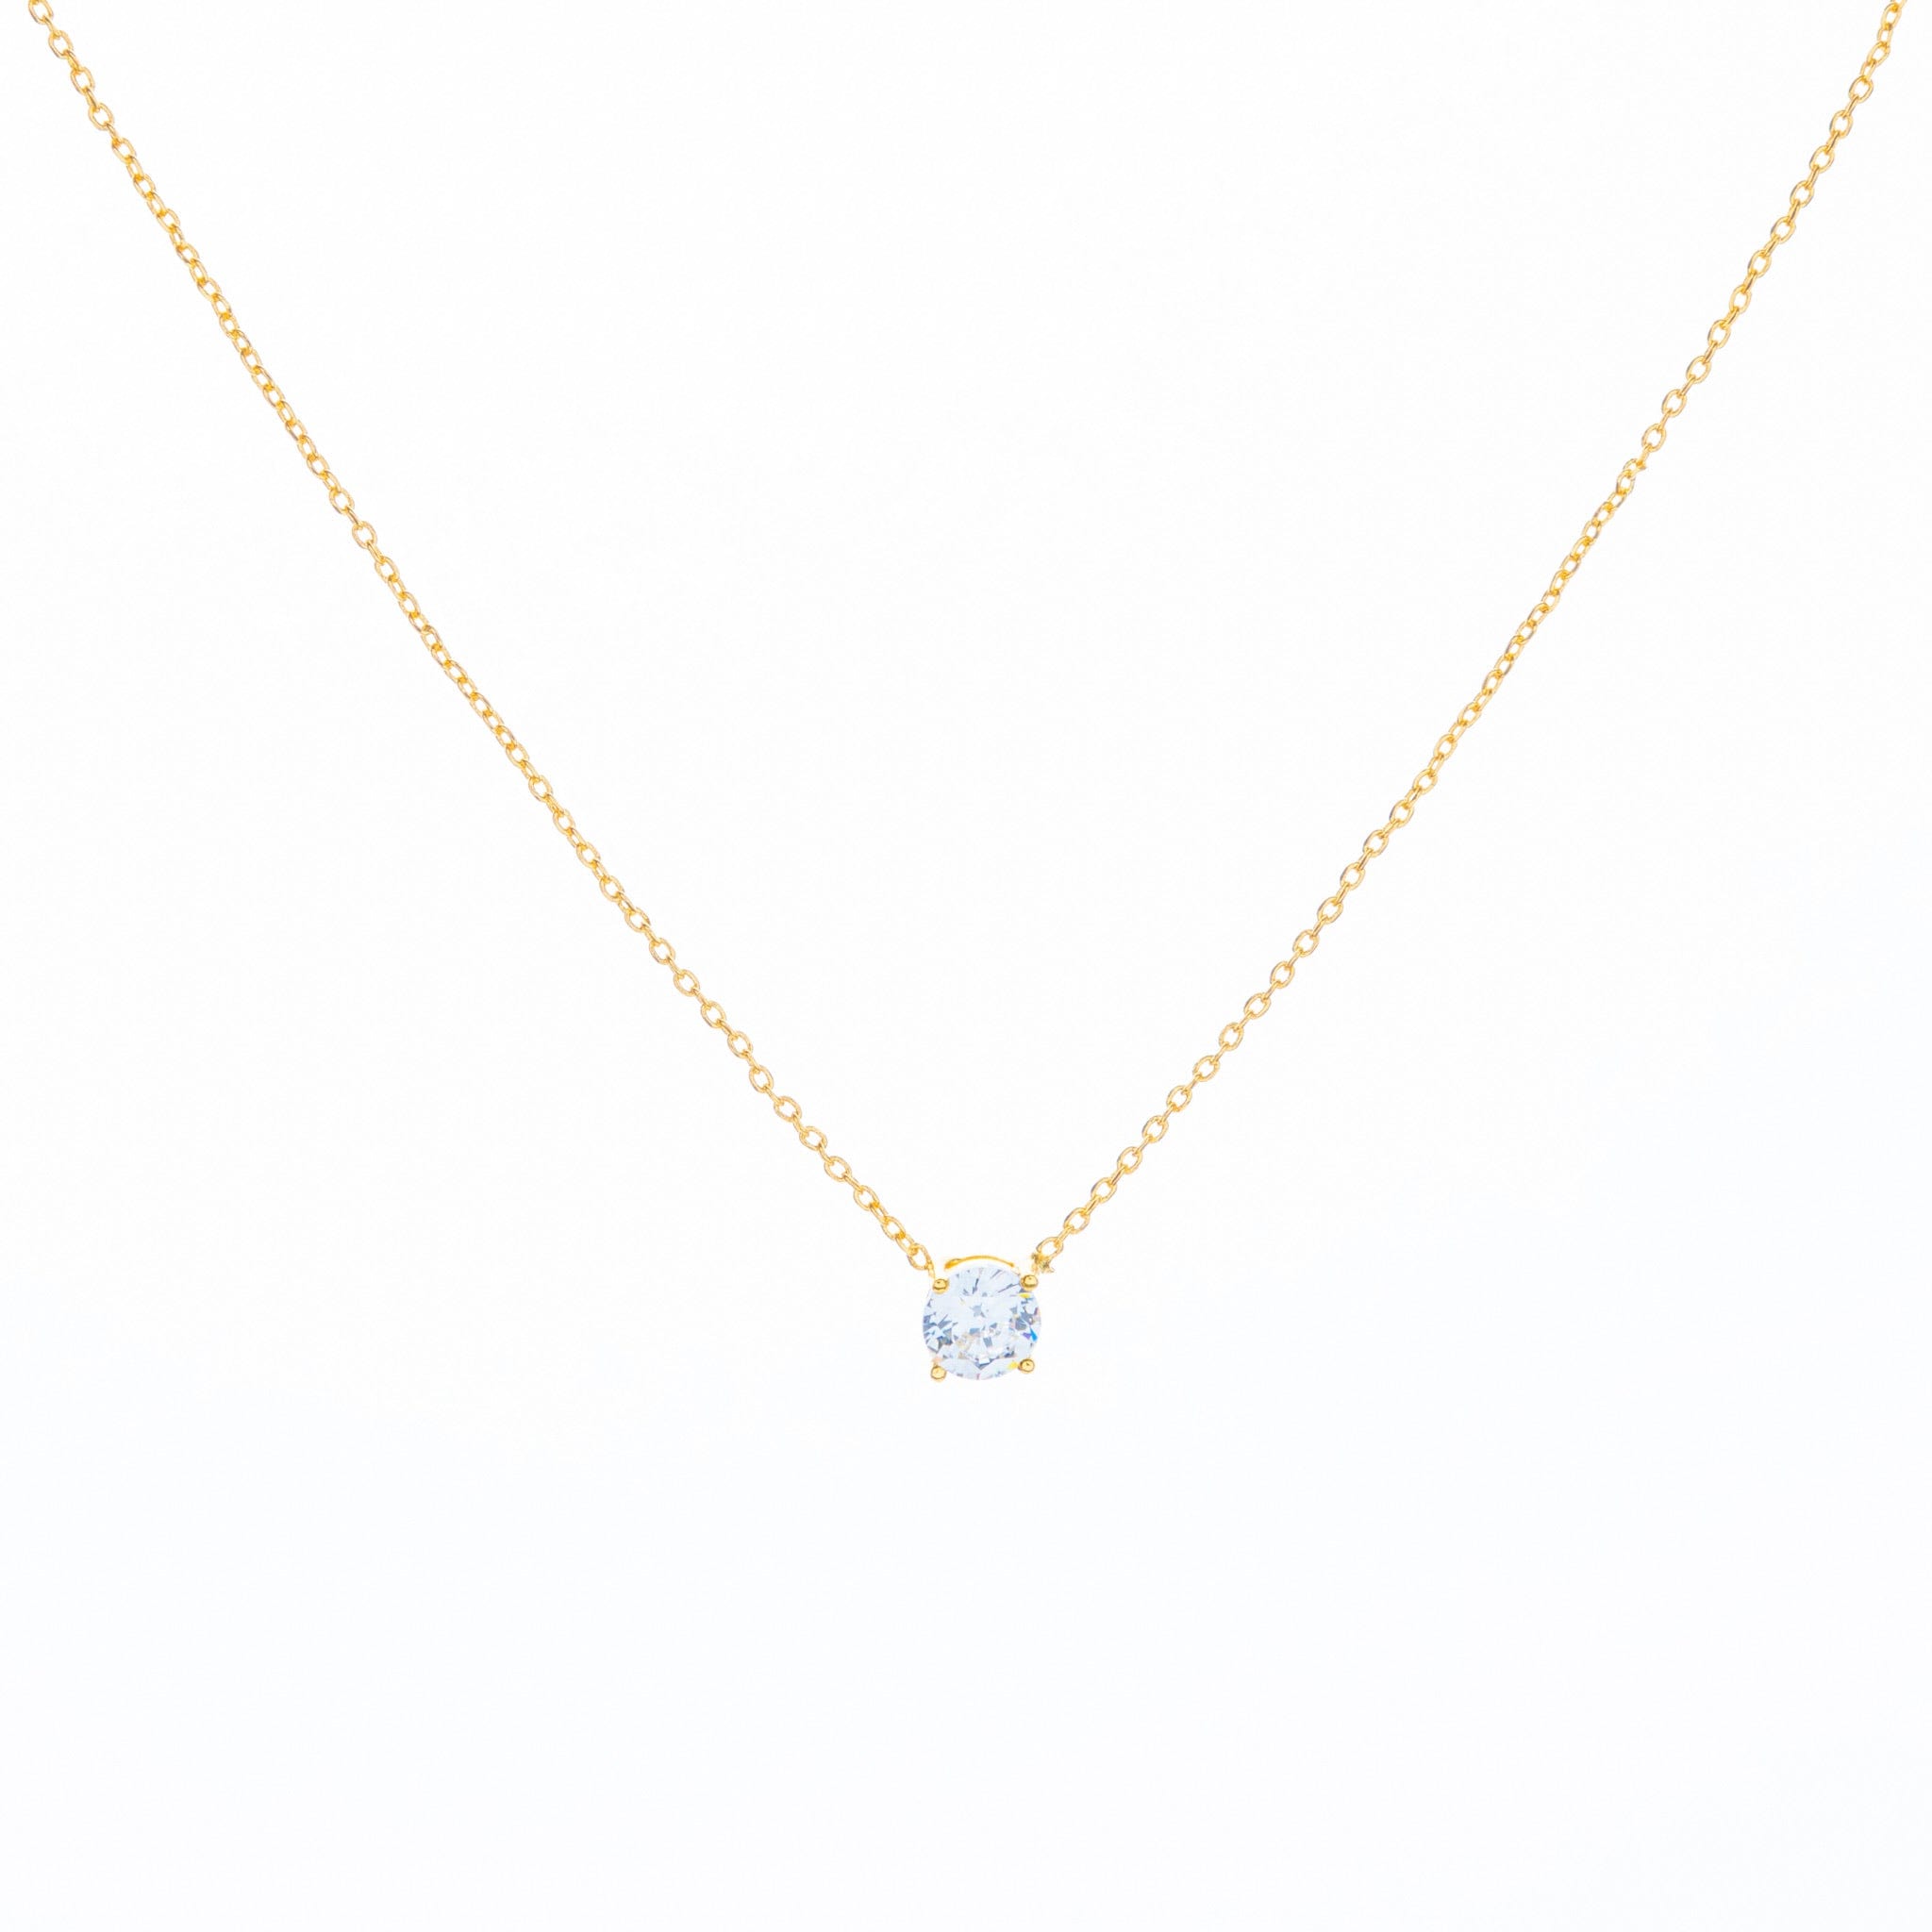 Floating Diamond Necklace Pear Shaped Diamond Pendant Bezel Set Necklace in  White Gold - Etsy | Bezel set necklace, Pear shaped diamond, Exquisite  necklace